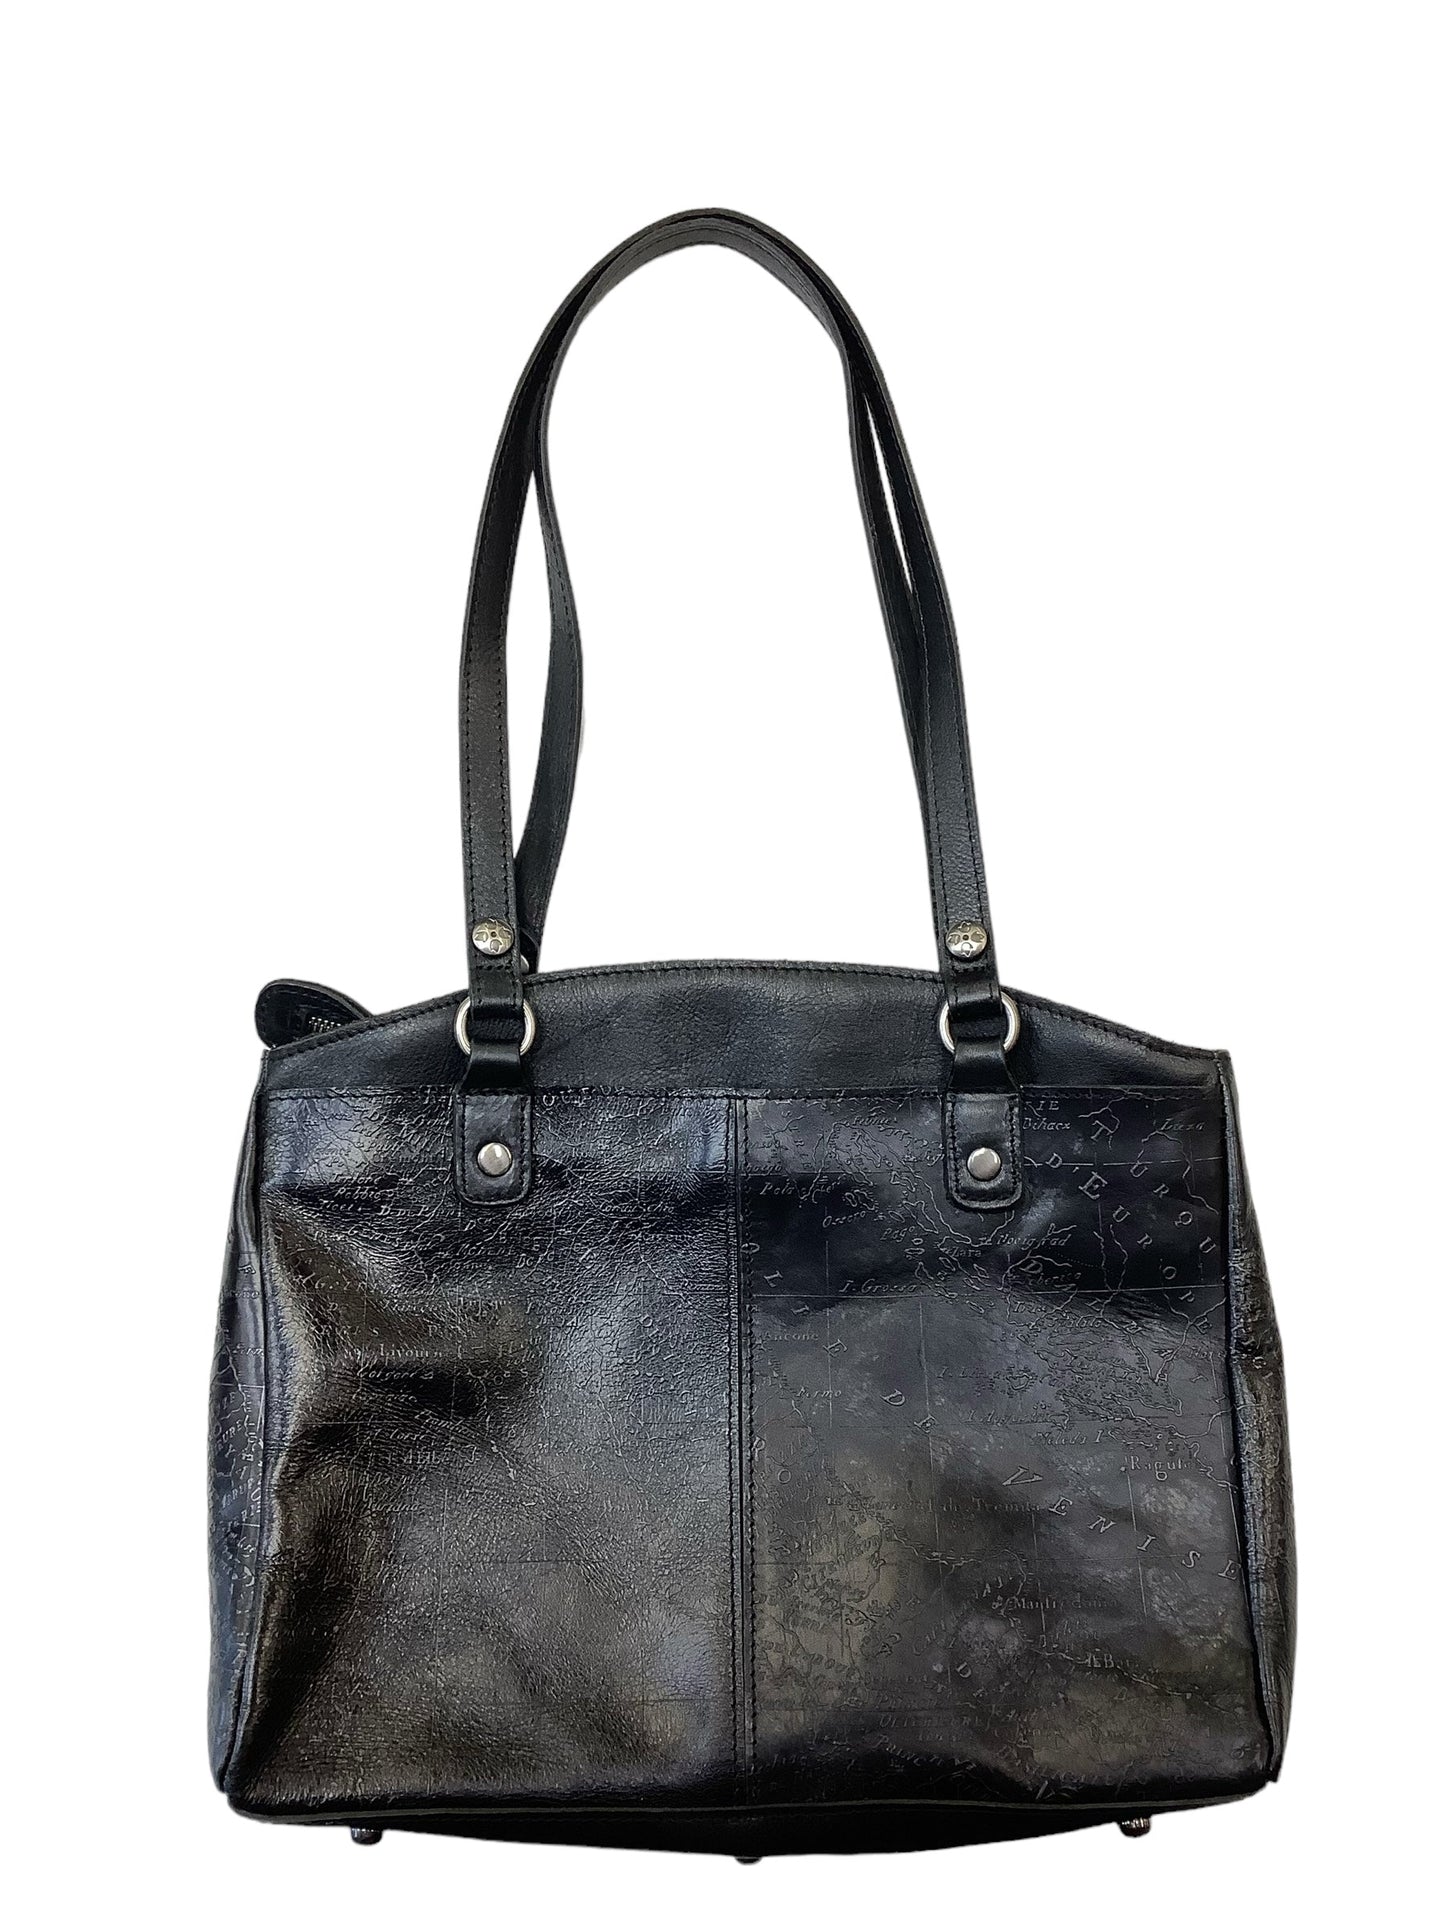 Handbag Designer By Patricia Nash  Size: Large